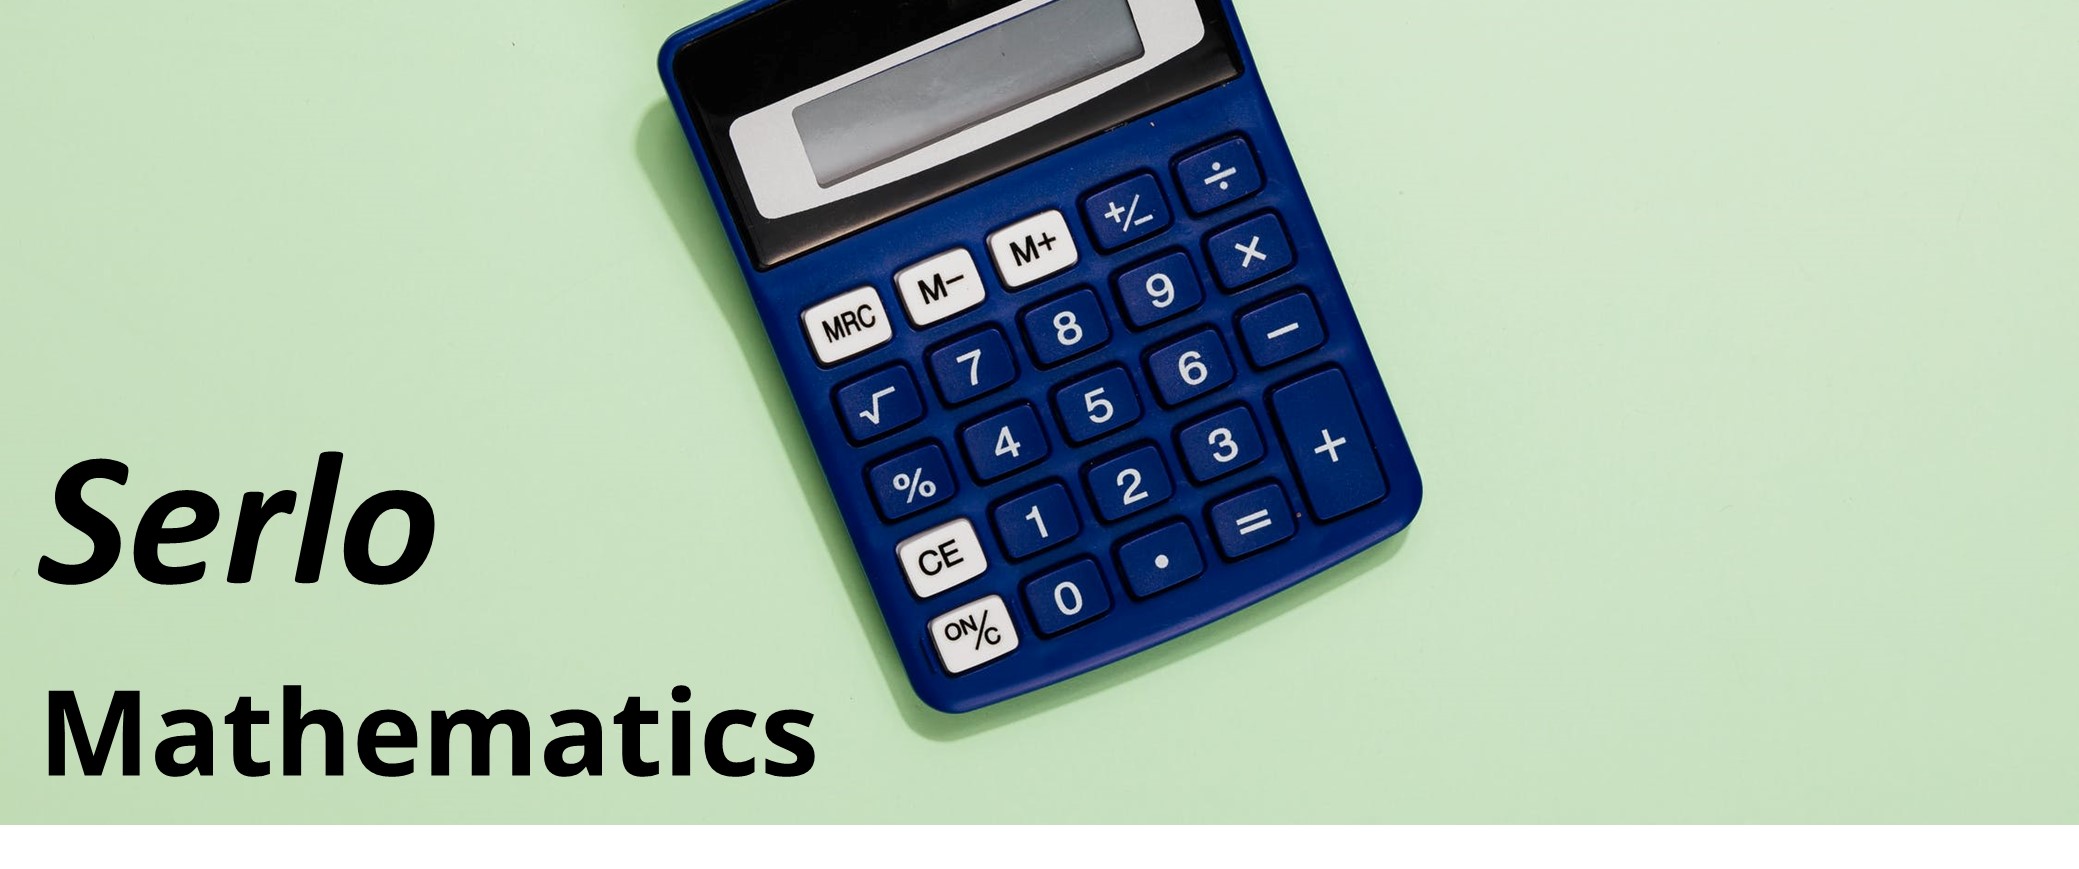 Image of an Calculator for Serlo Mathematics